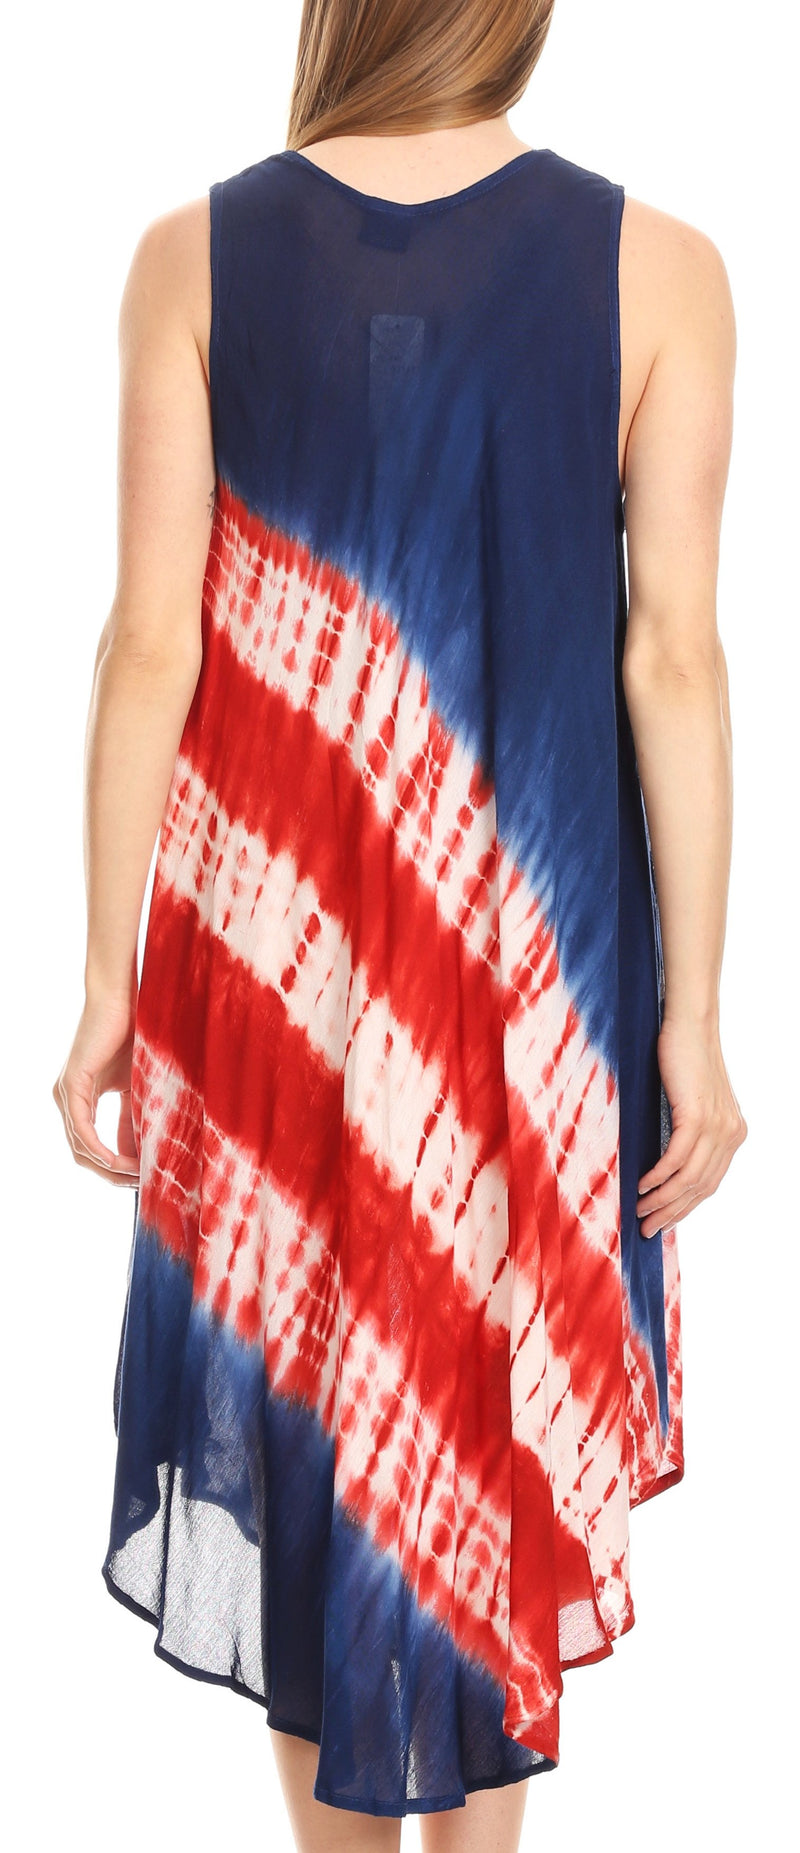 Sakkas Helen Stars and Stripes Patriotic Summer Tank Dress Light Casual Simple